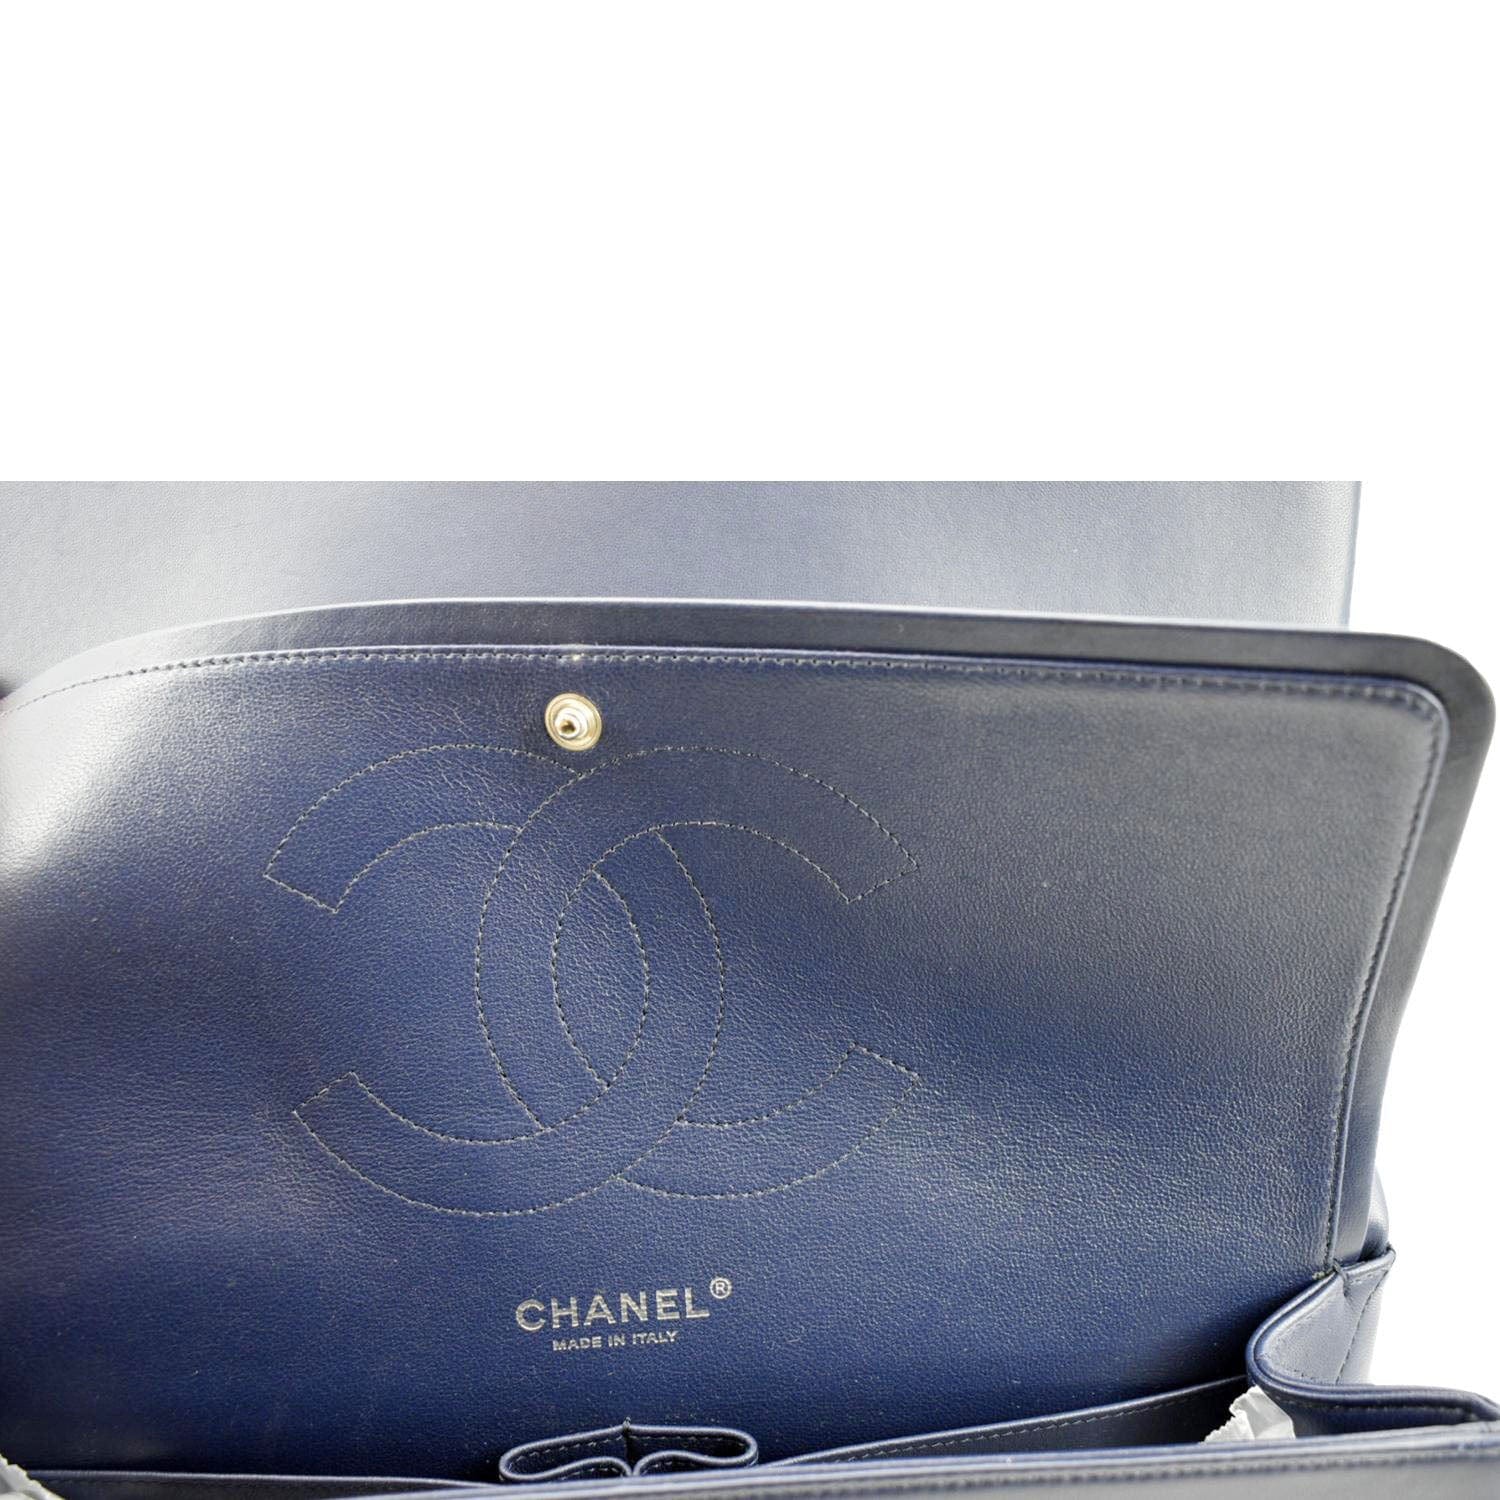 CHANEL Jumbo Classic Double Flap Bag in Black Caviar GHW